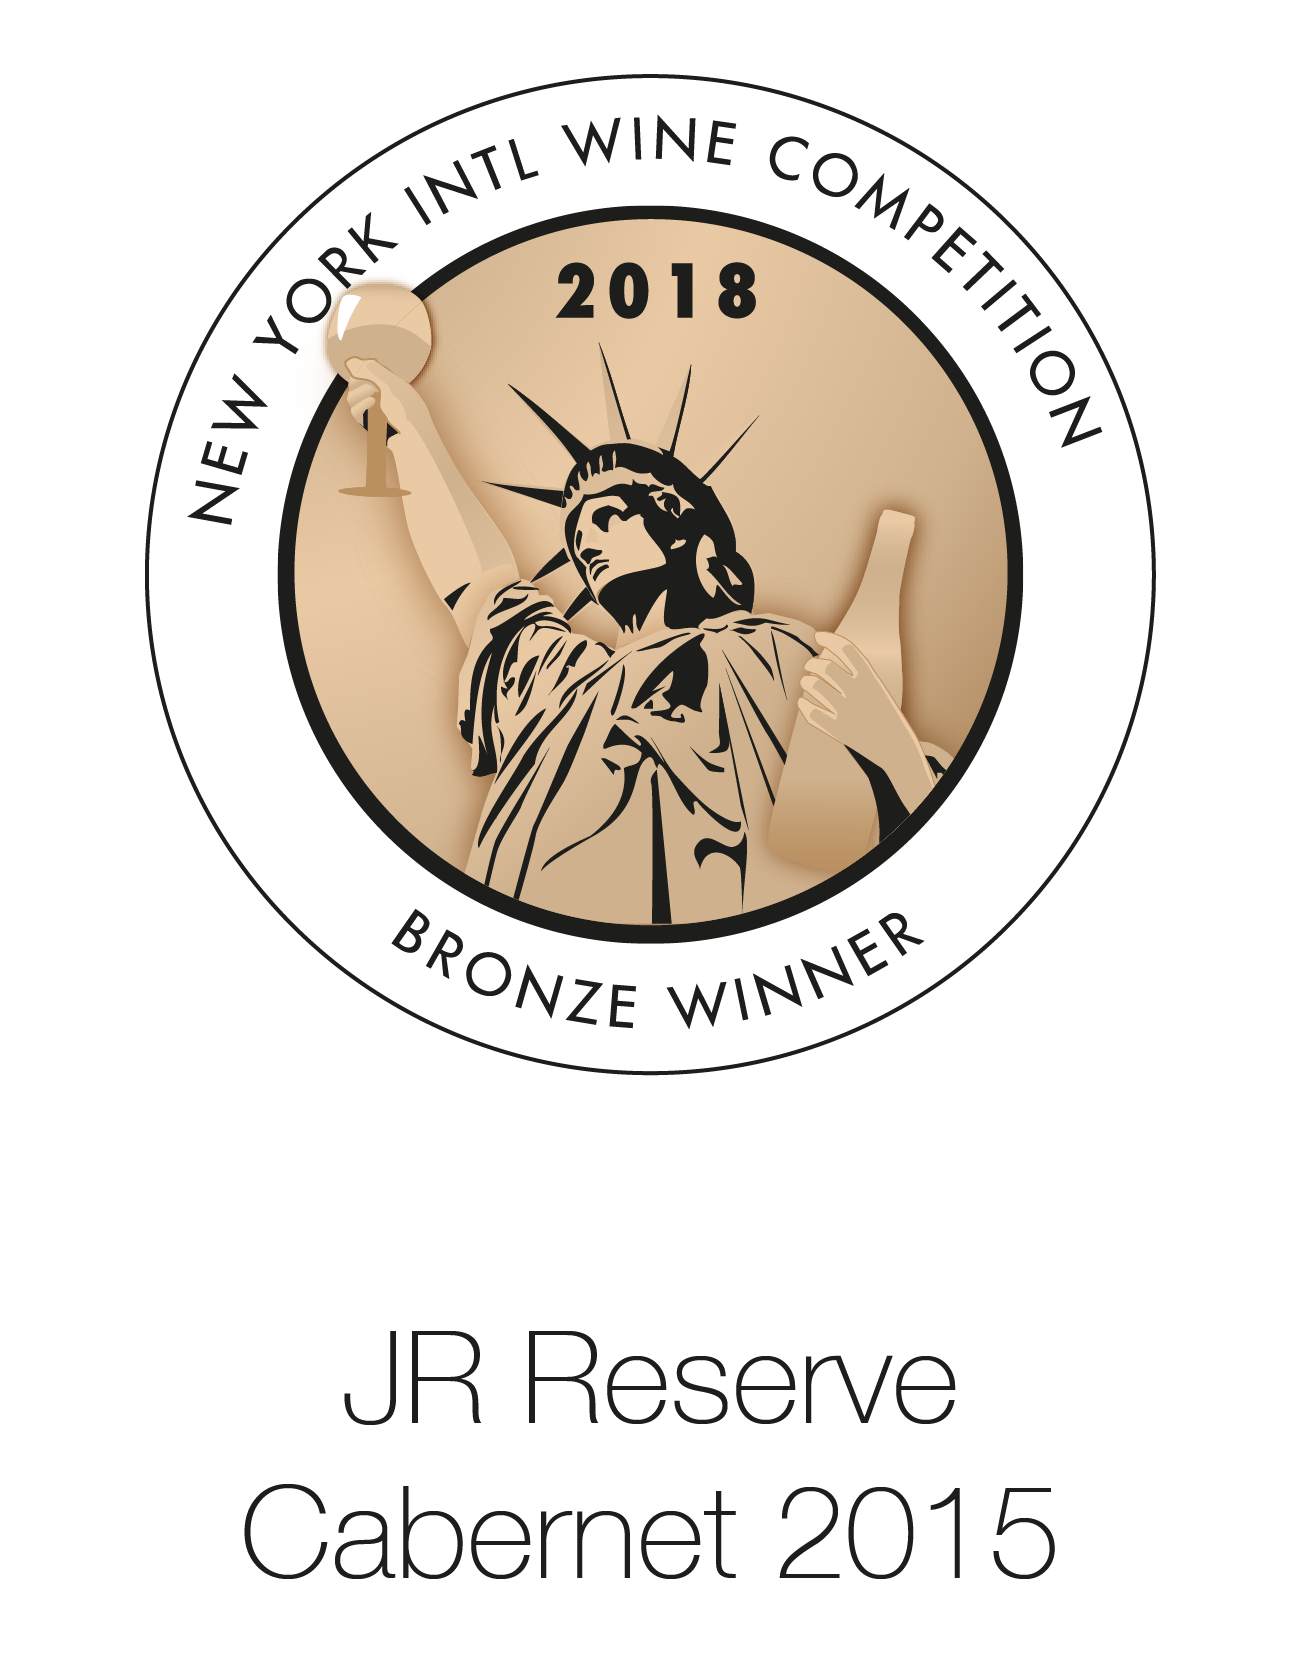 JR Reserve - Cabernet Sauvignon 2015 - New York Intl Wine Competition 2018